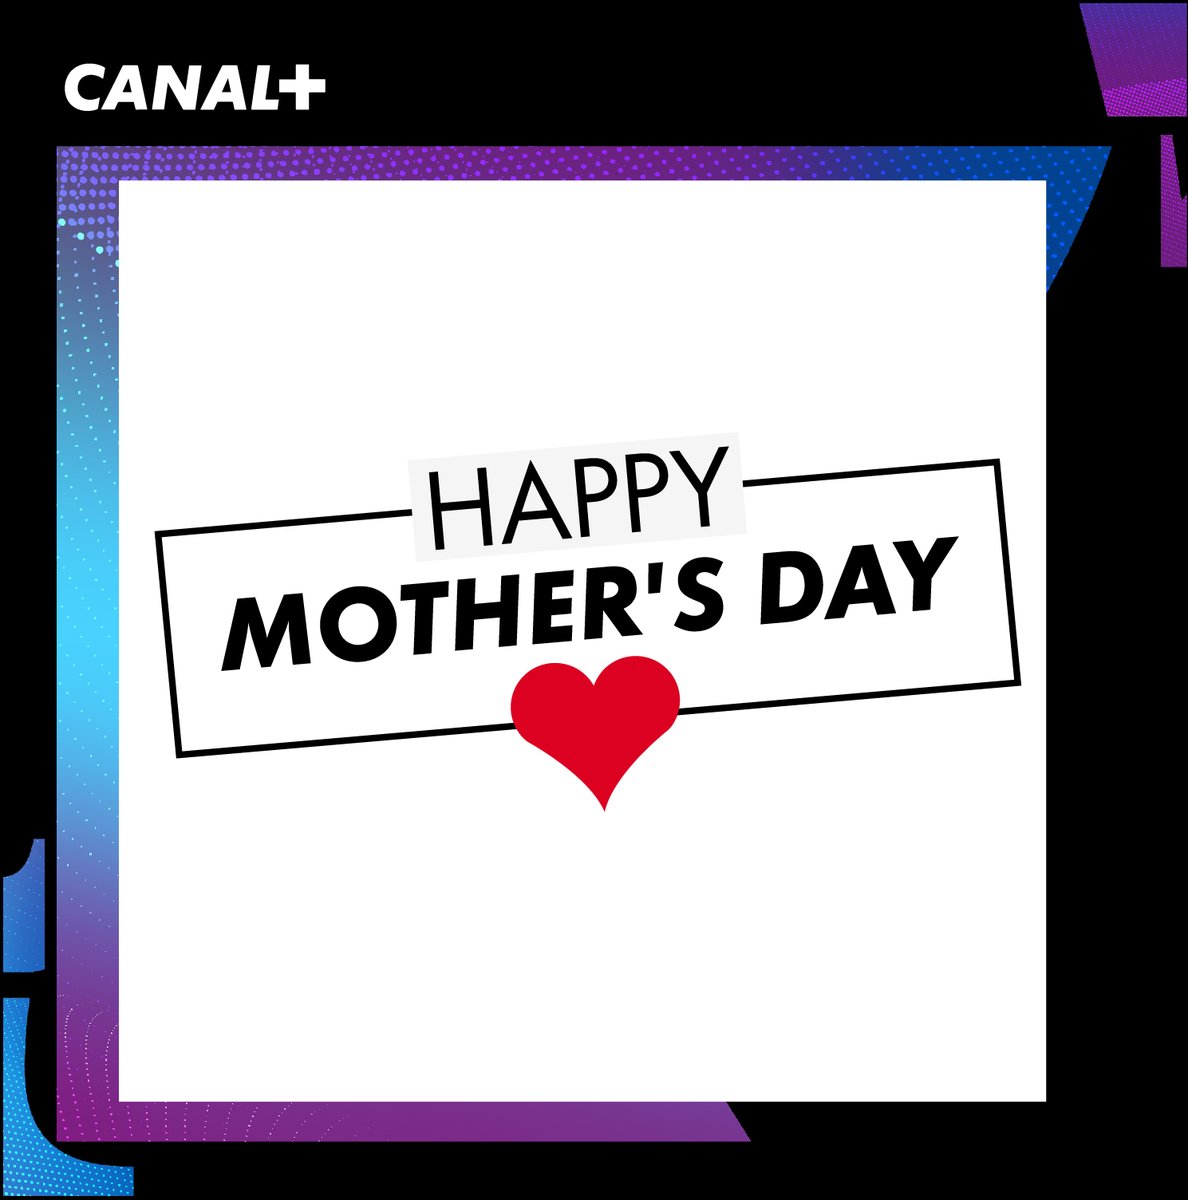 Happy Mother's Day!💐🌷🌸

#canalplusrwanda #mothersday